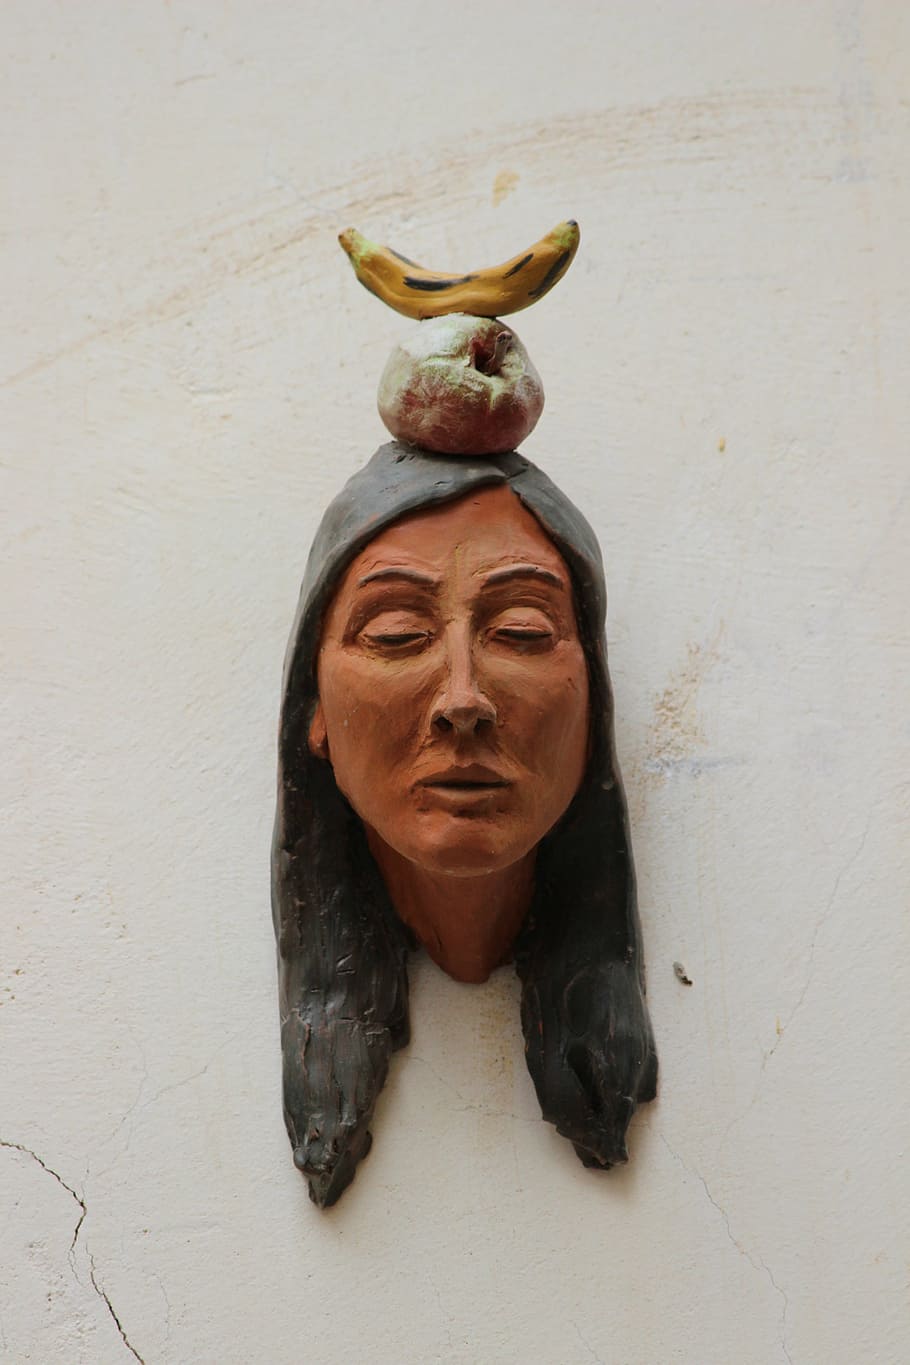 indians, head, bust, clay figure, ceramic, banana, apple, fruit